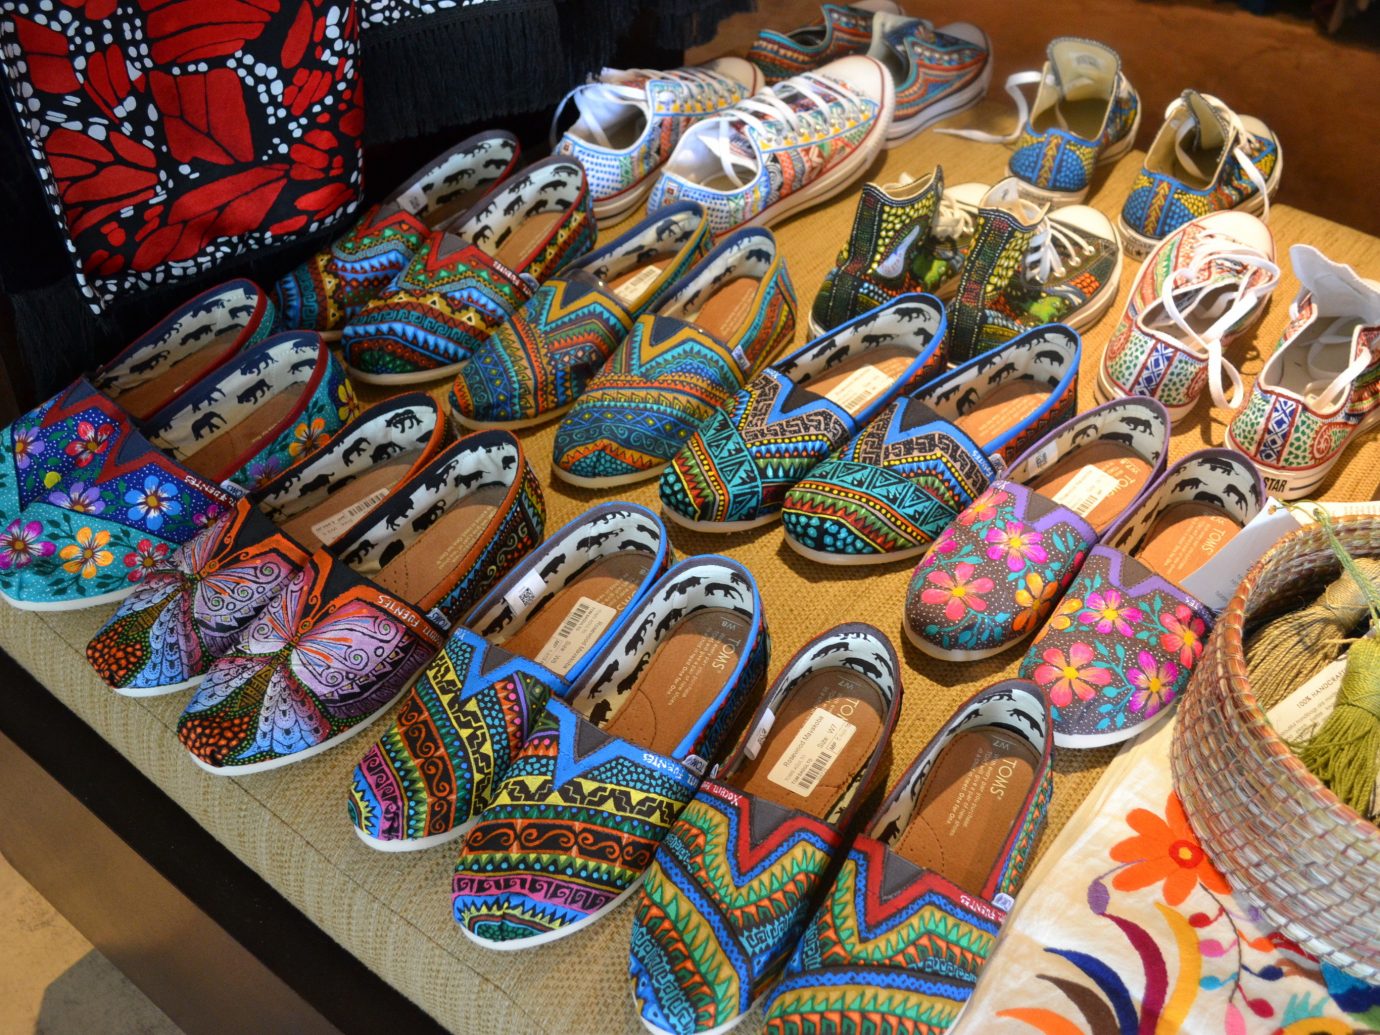 Hotels footwear indoor public space shoe market food art bazaar colorful decorated